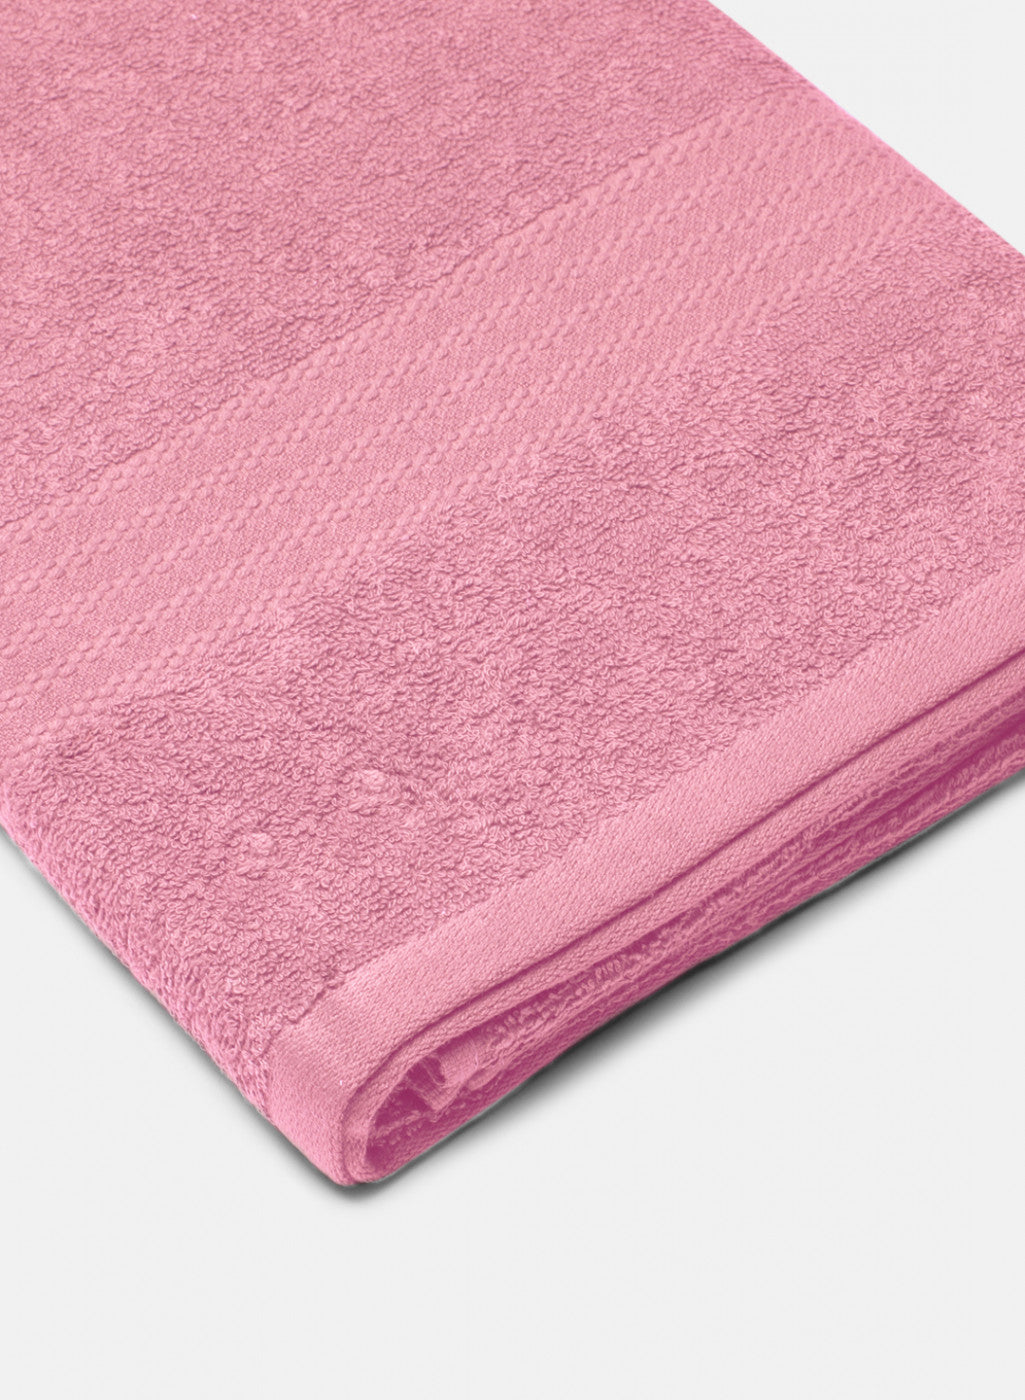 Pink Cotton 400 GSM Bath Towel